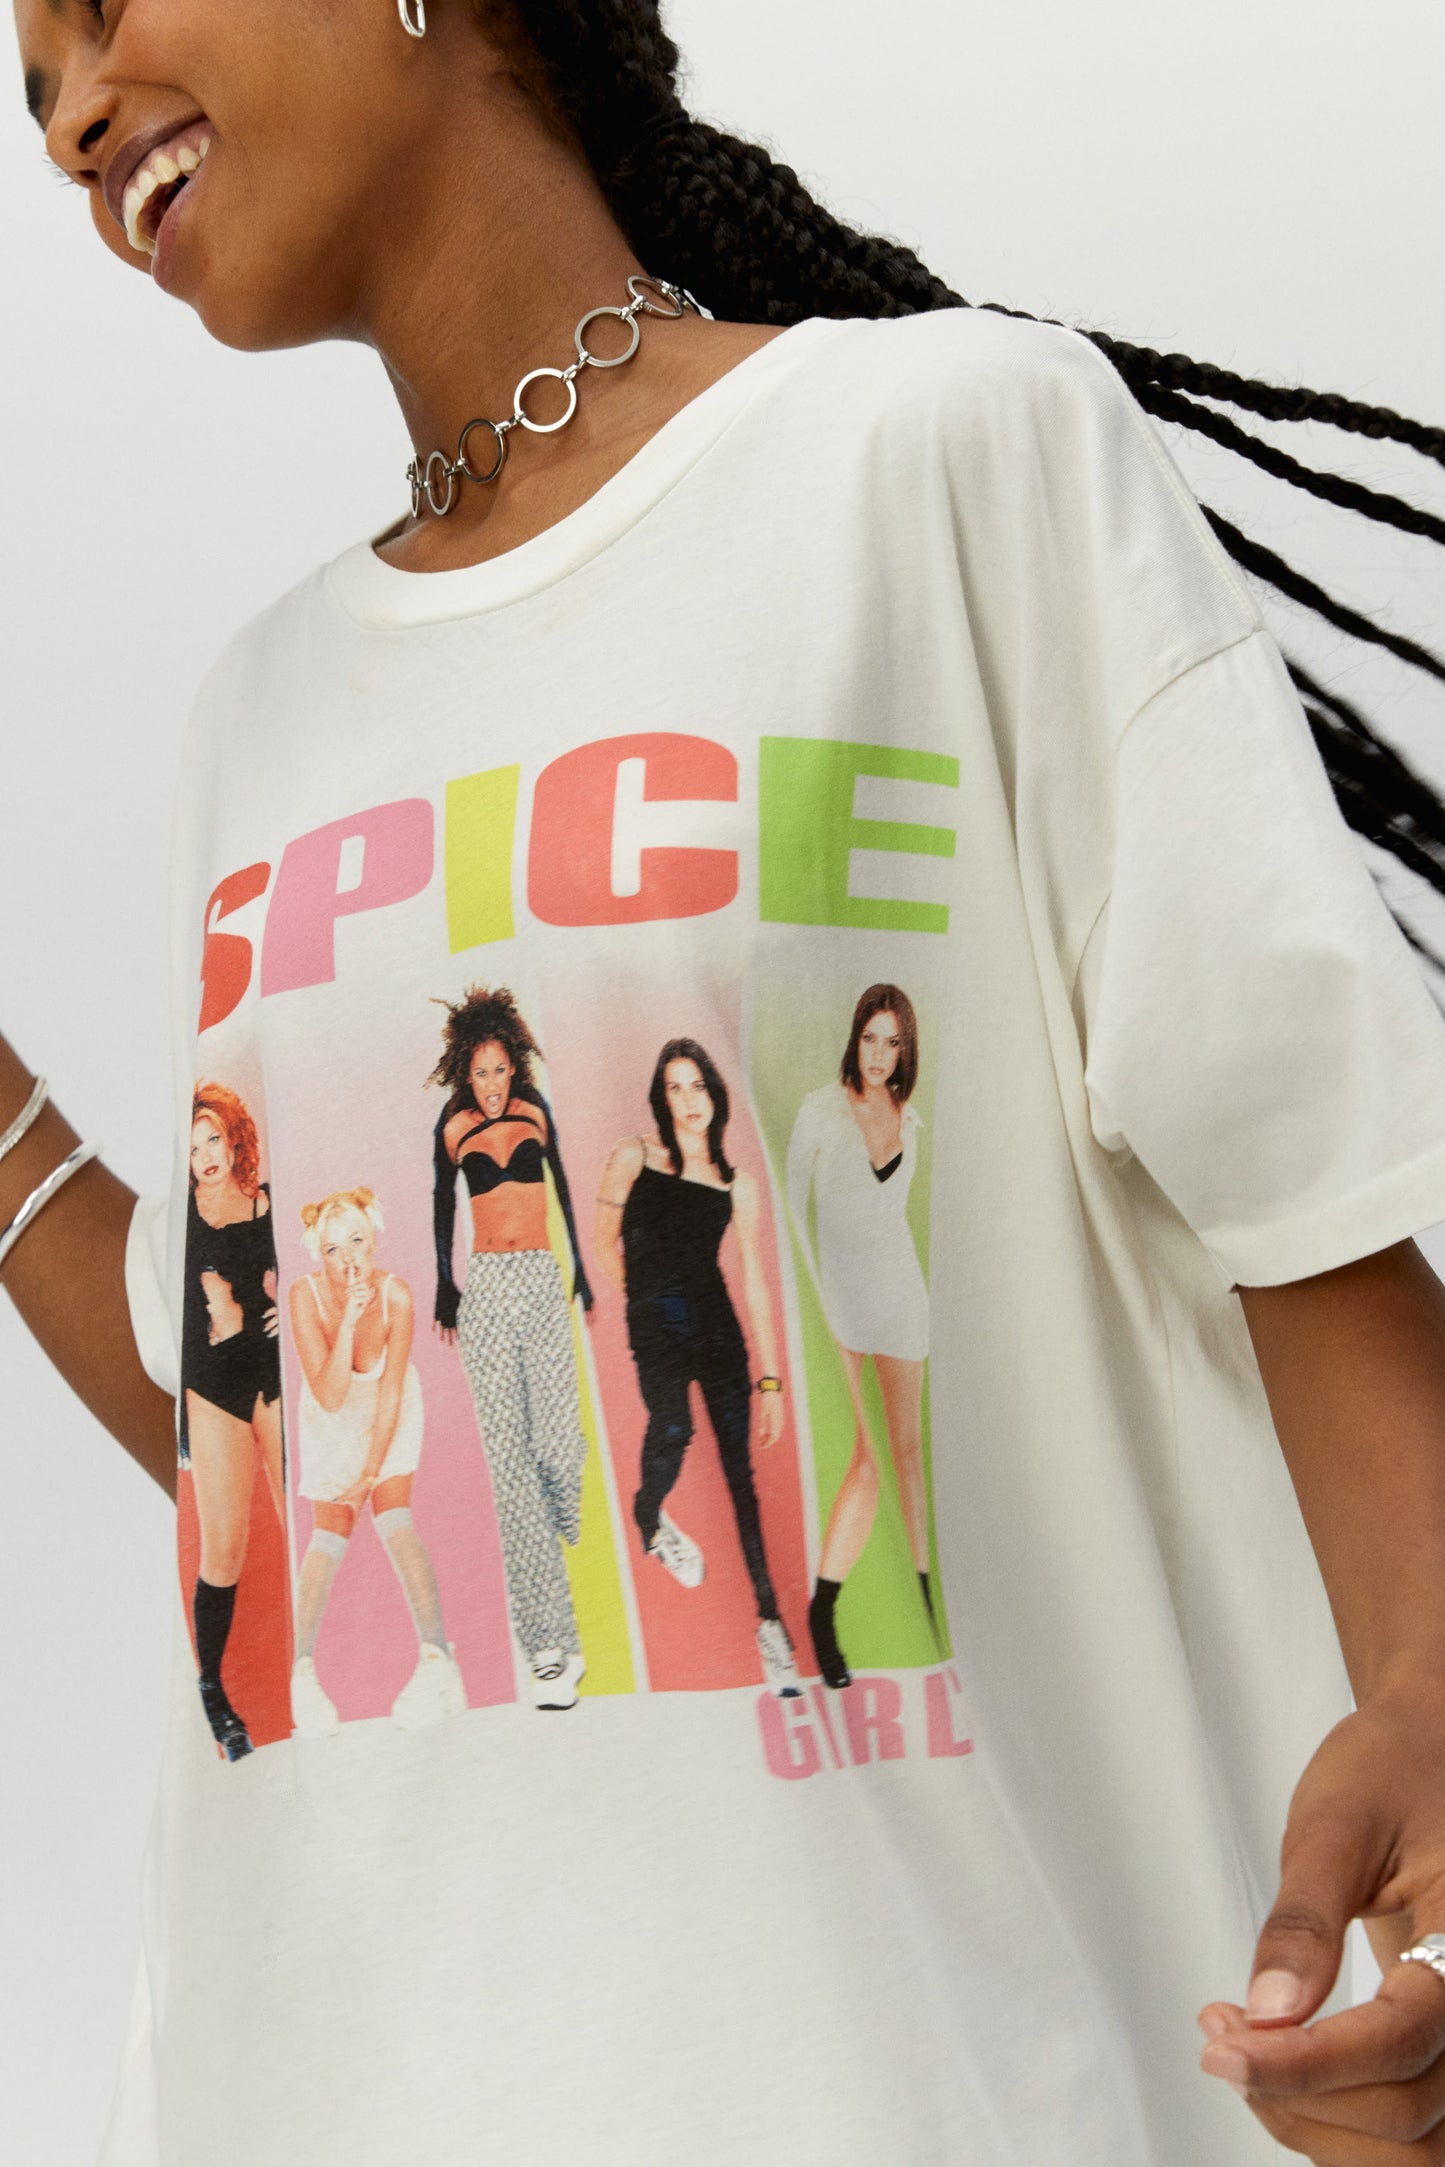 Spice Girls Louisiana Crawfish Boil Graphic Tee